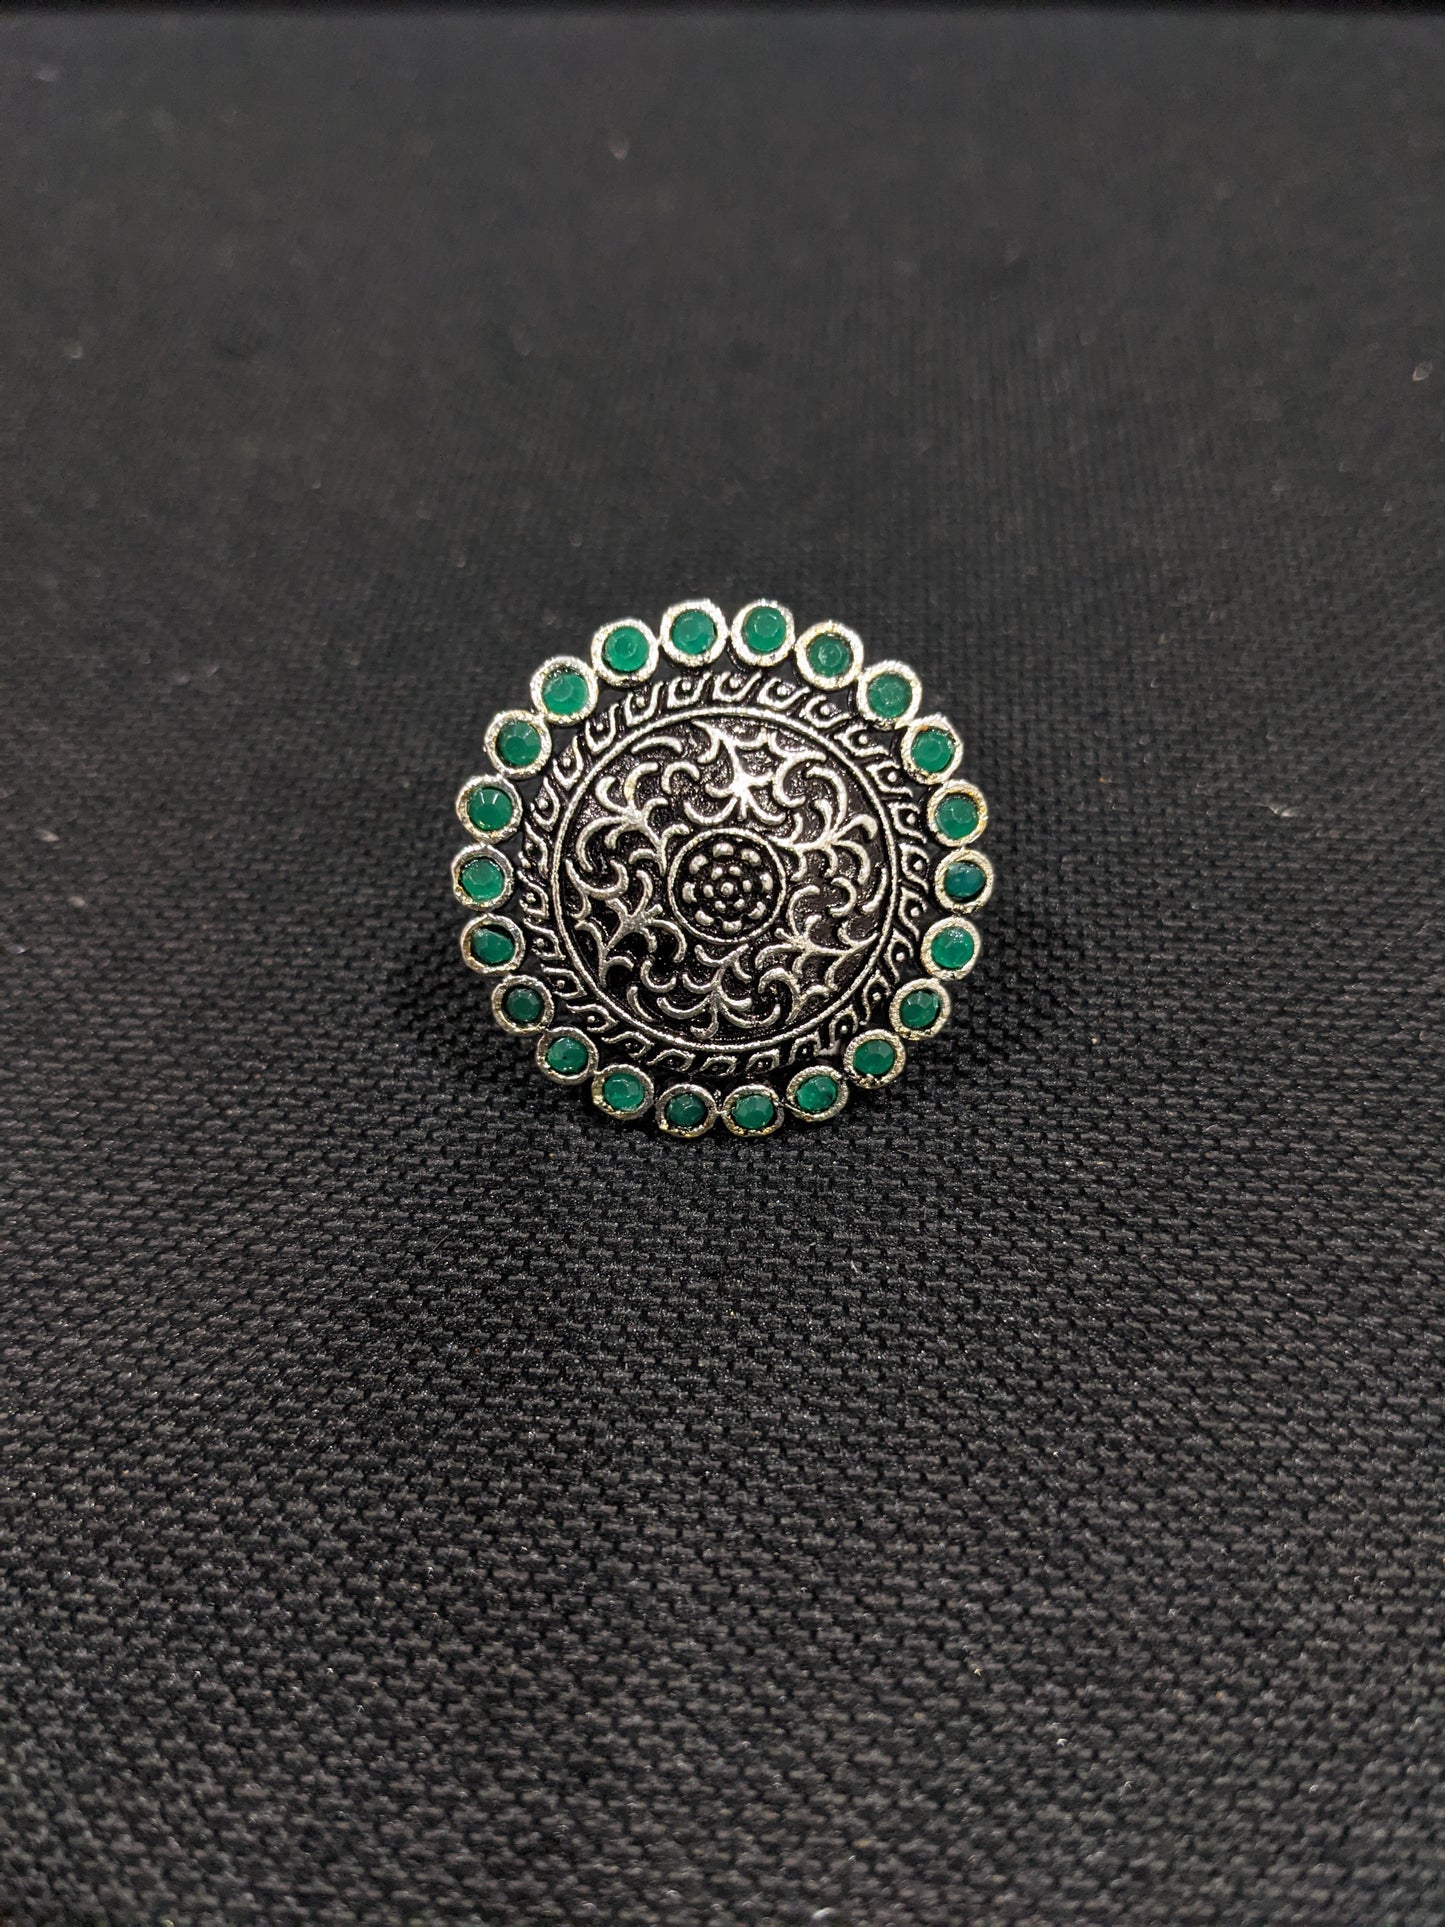 Oxidized silver round polki stone Adjustable Finger ring - Simpliful